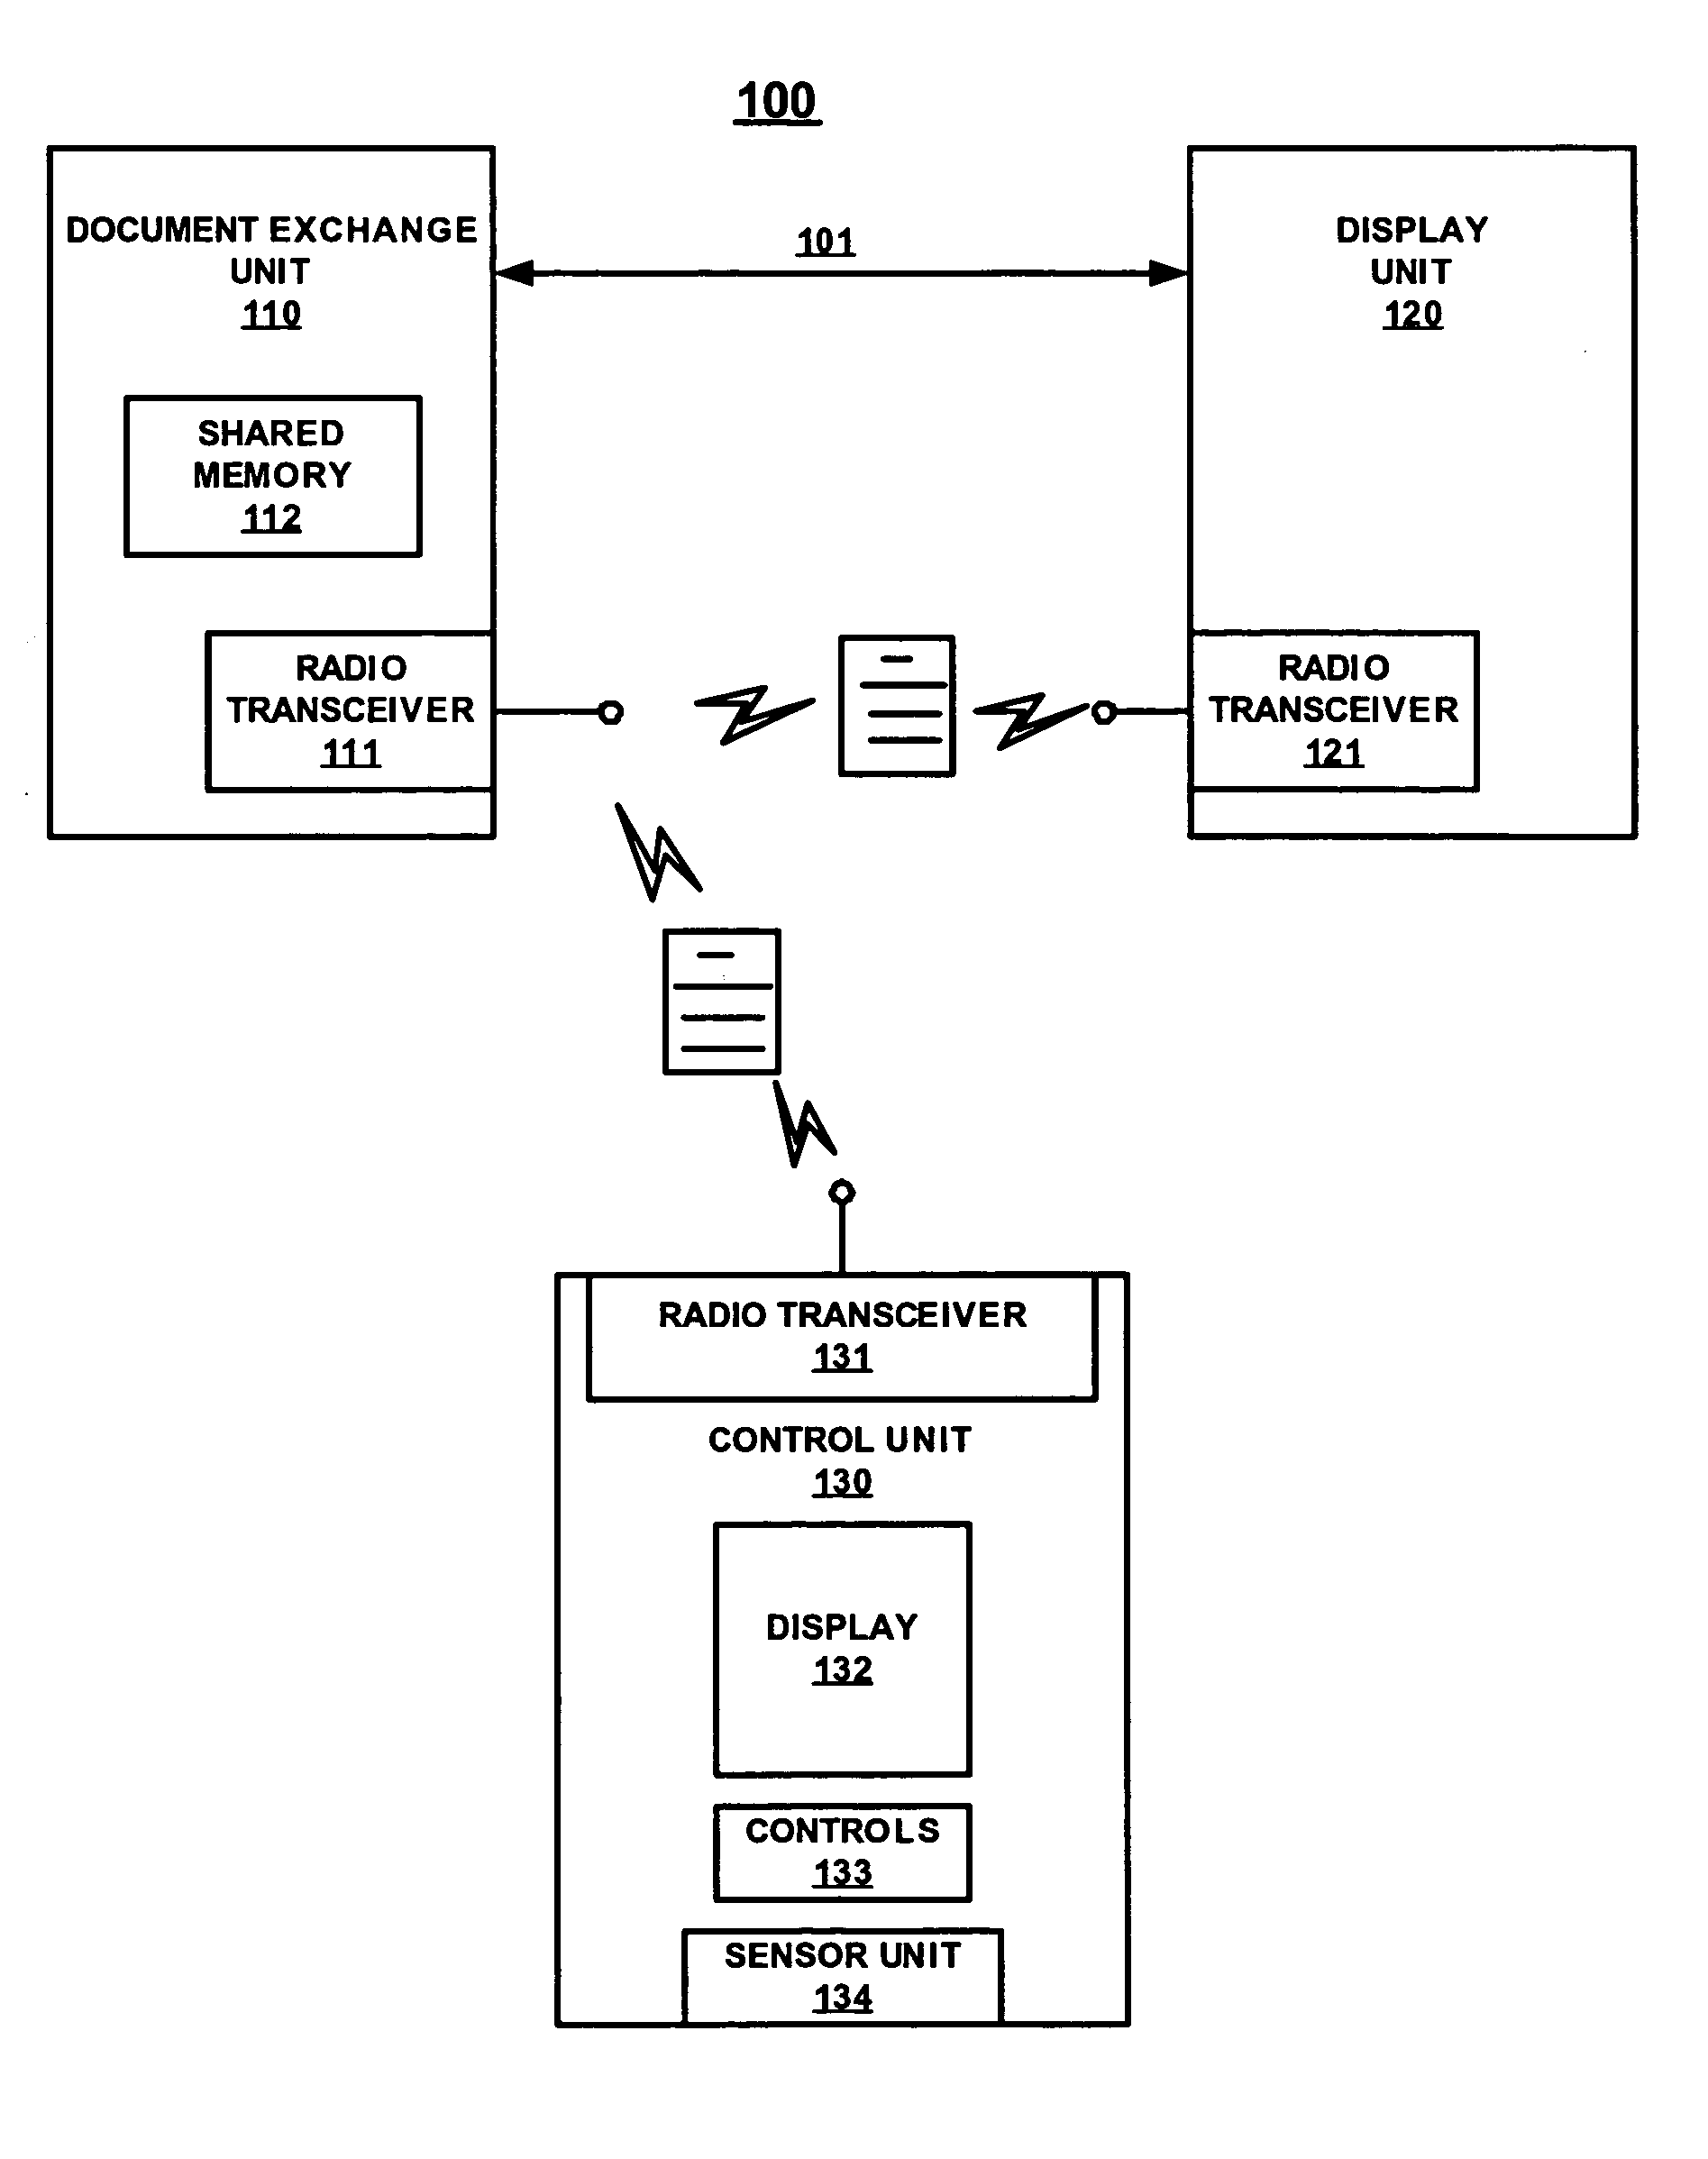 Sensor-enhanced document exchange and display control device